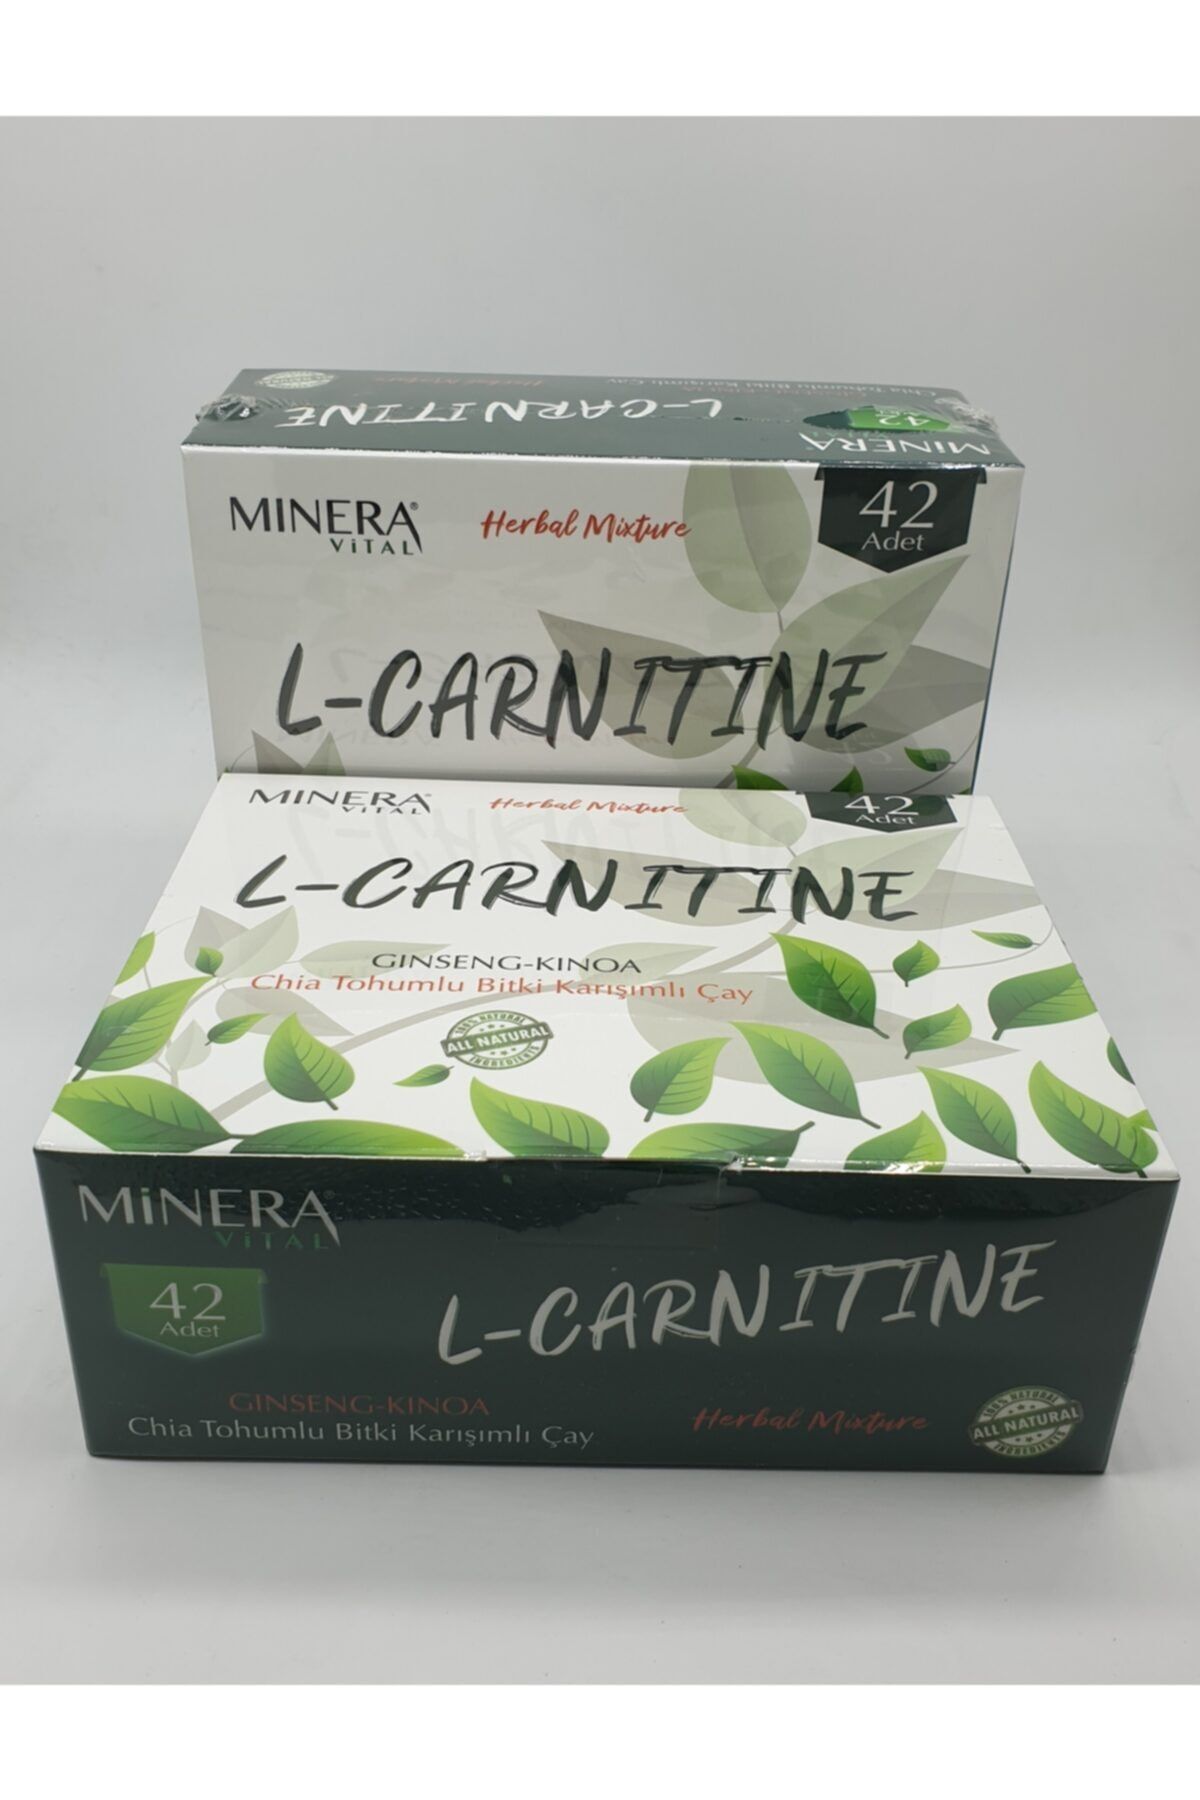 Minera L-carnitine Ginseng Kinoa Bitki Karışım Lı Çay 2 Adet